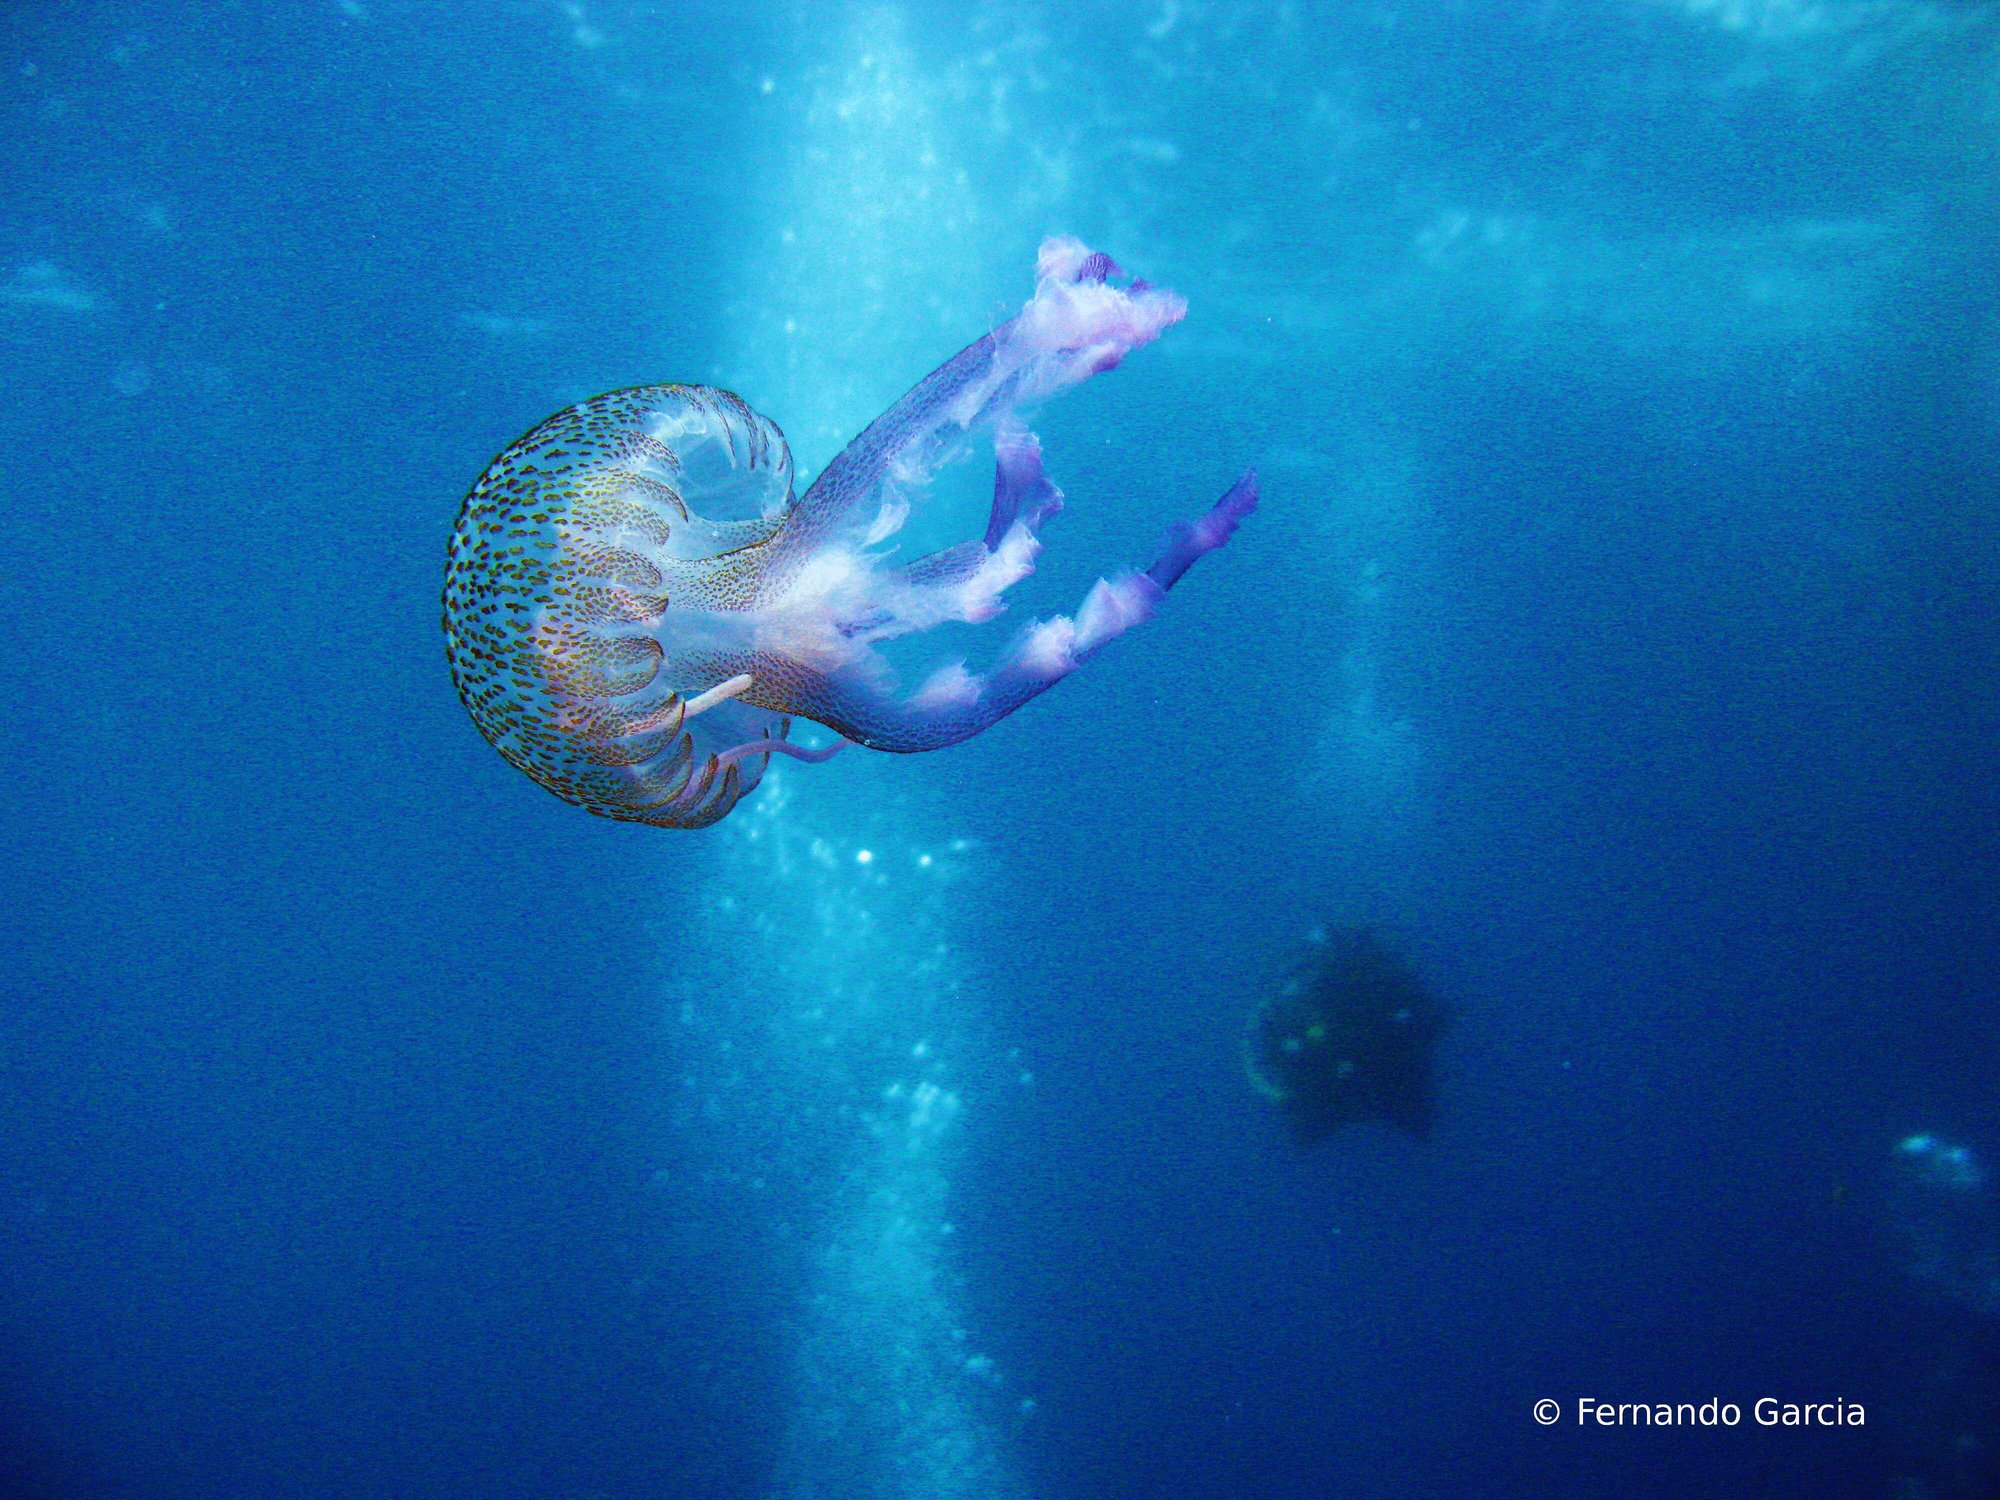 IMG_1360-Fernando Garcia-Jellyfish and diver (1)